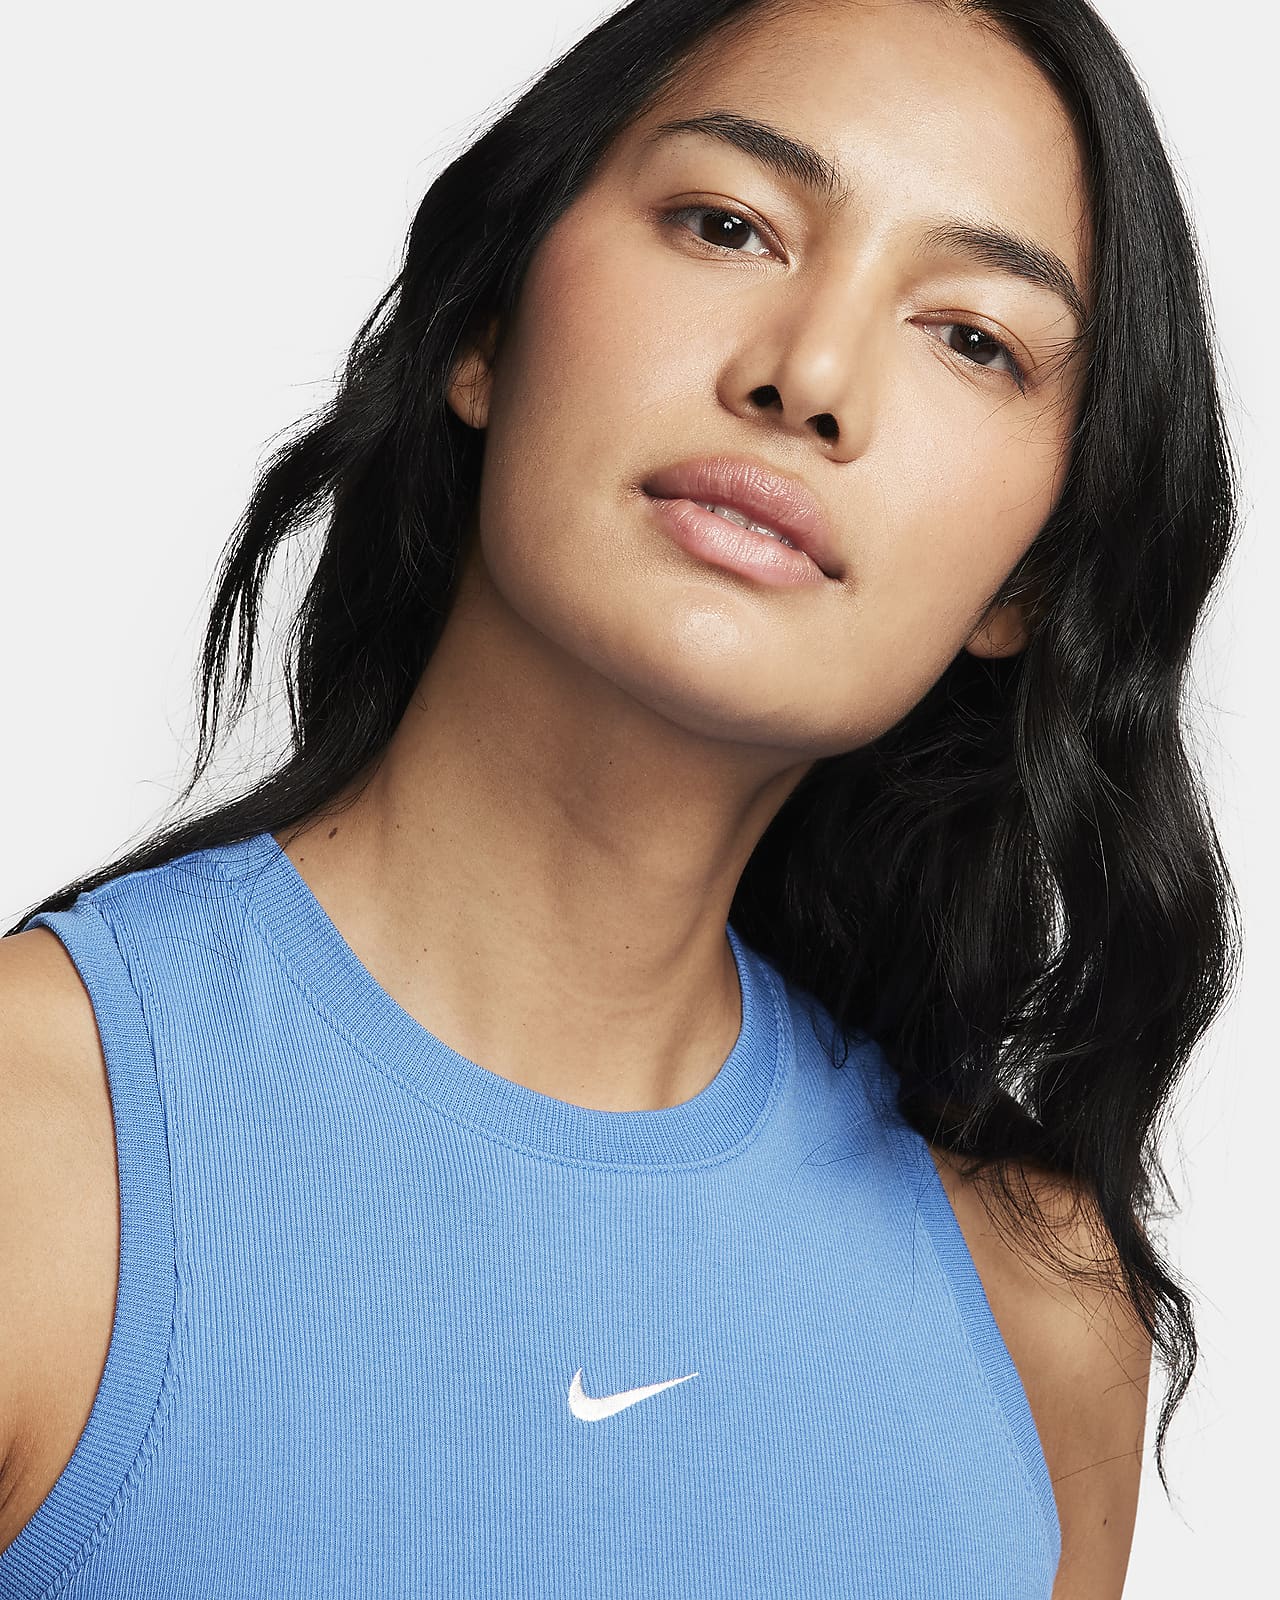 Nike Womens Crochet Tank Top - Blue